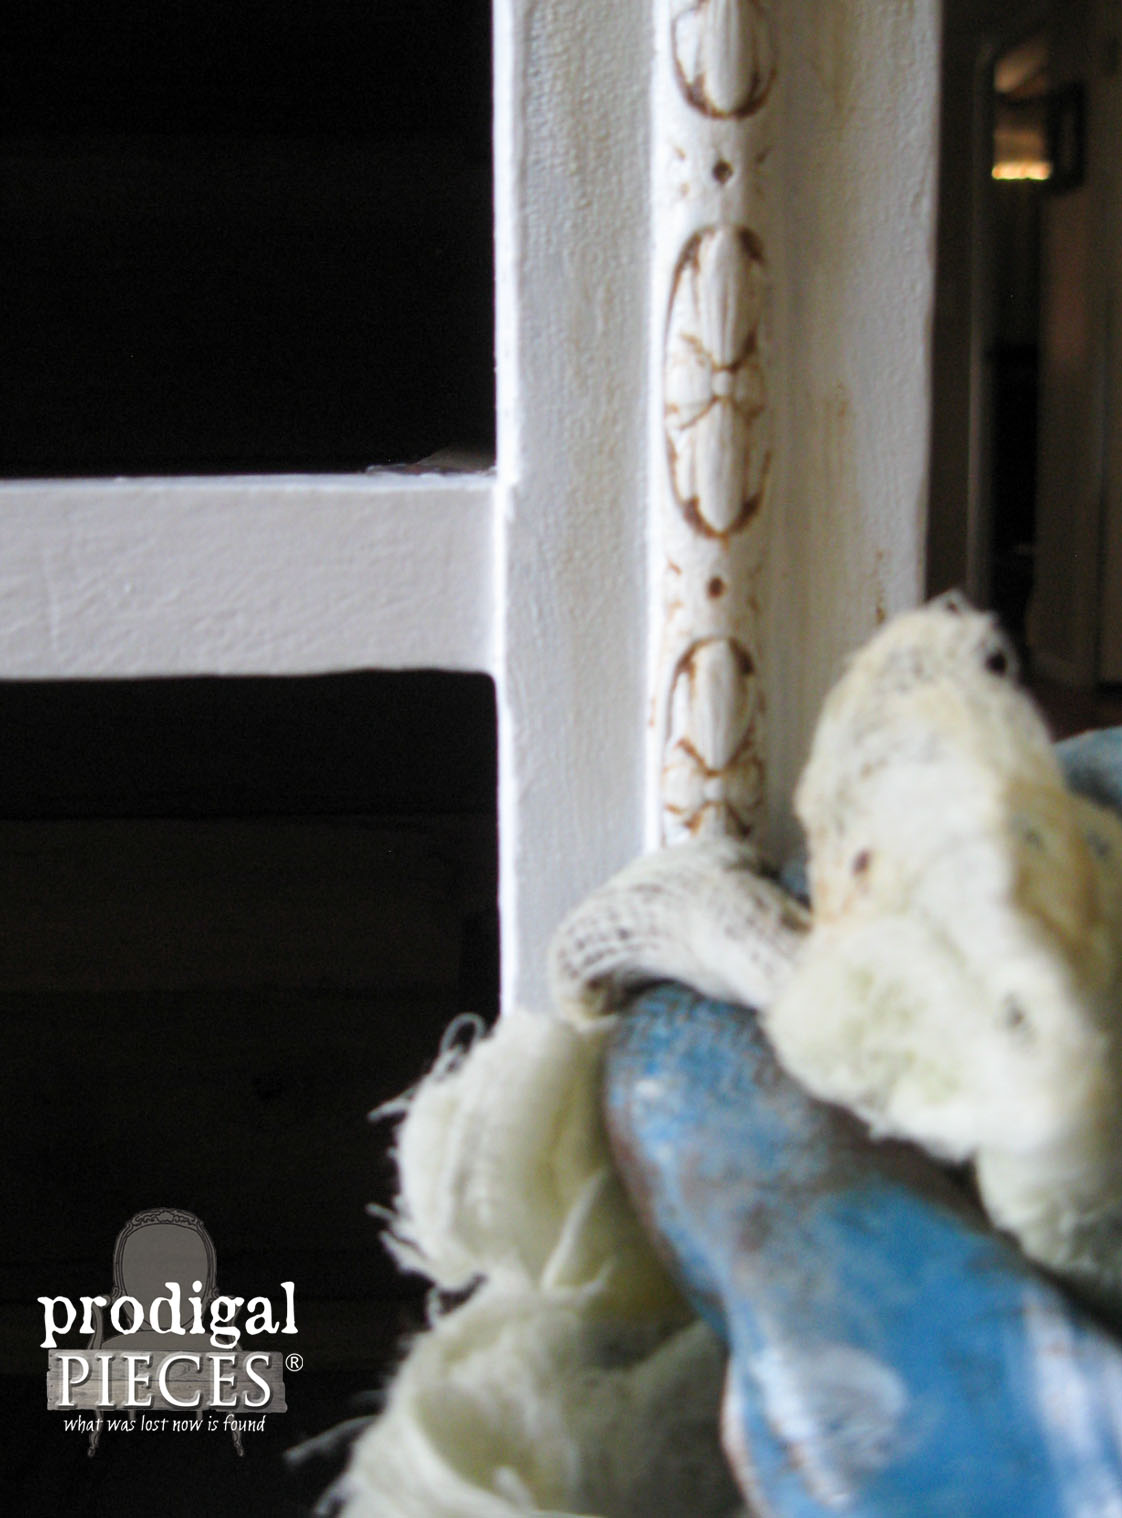 Using Dark Wax to Draw Out Distressed Dresser Details | Prodigal Pieces | www.prodigalpieces.com